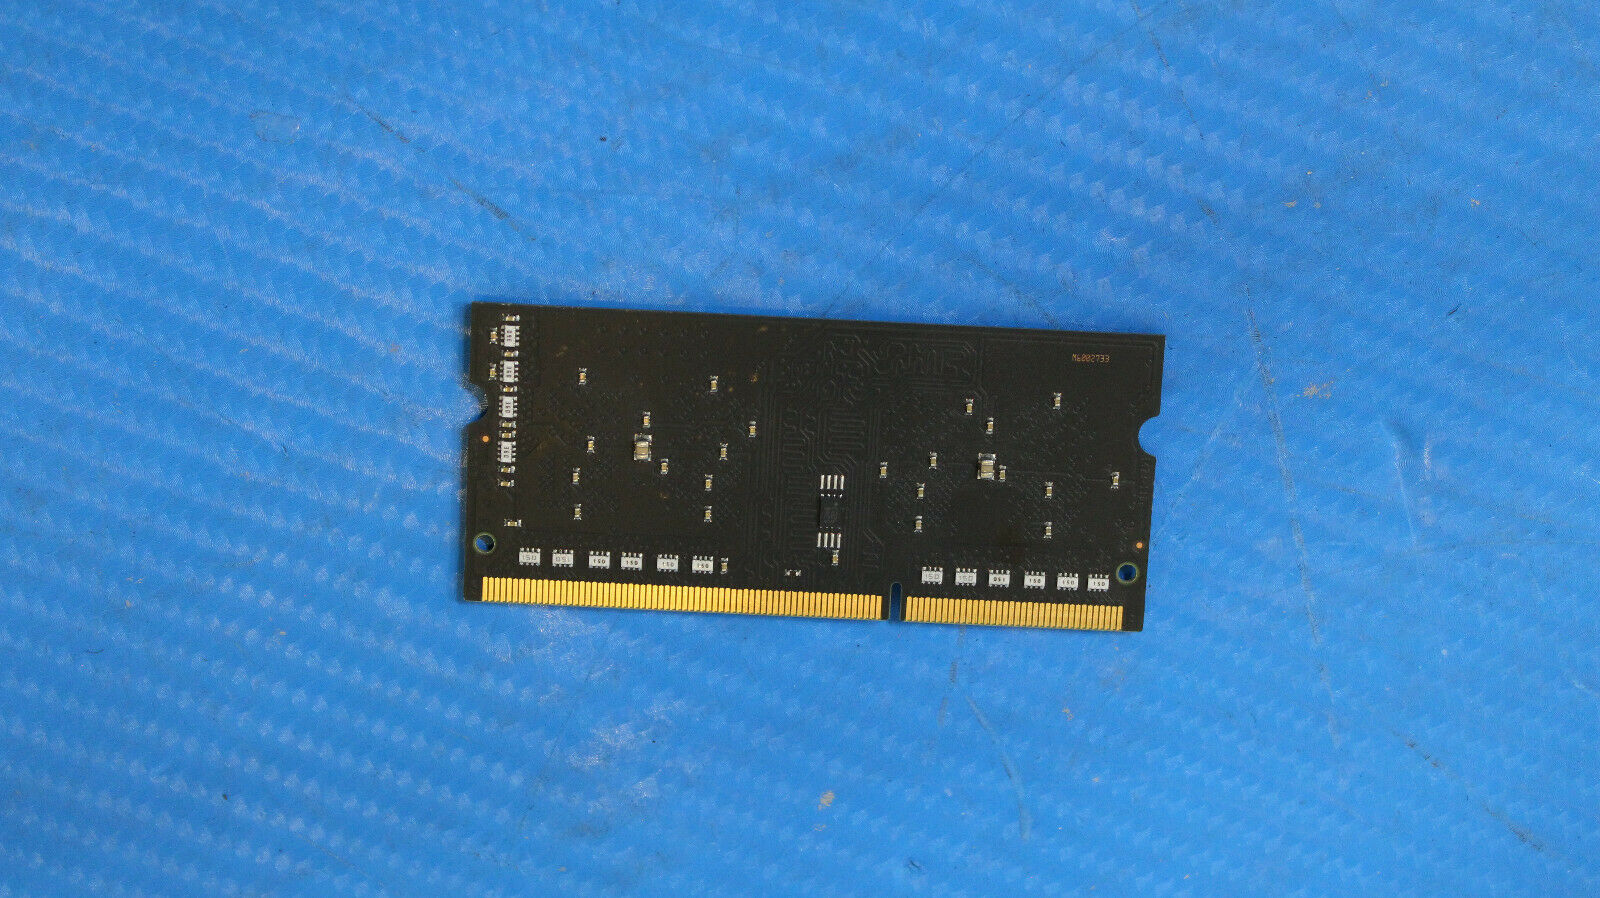 Apple A1278 SO-DIMM SK hynix 2GB Memory PC3L-12800S-11-13-C3 HMT425S6AFR6A-PB #1 SK hynix